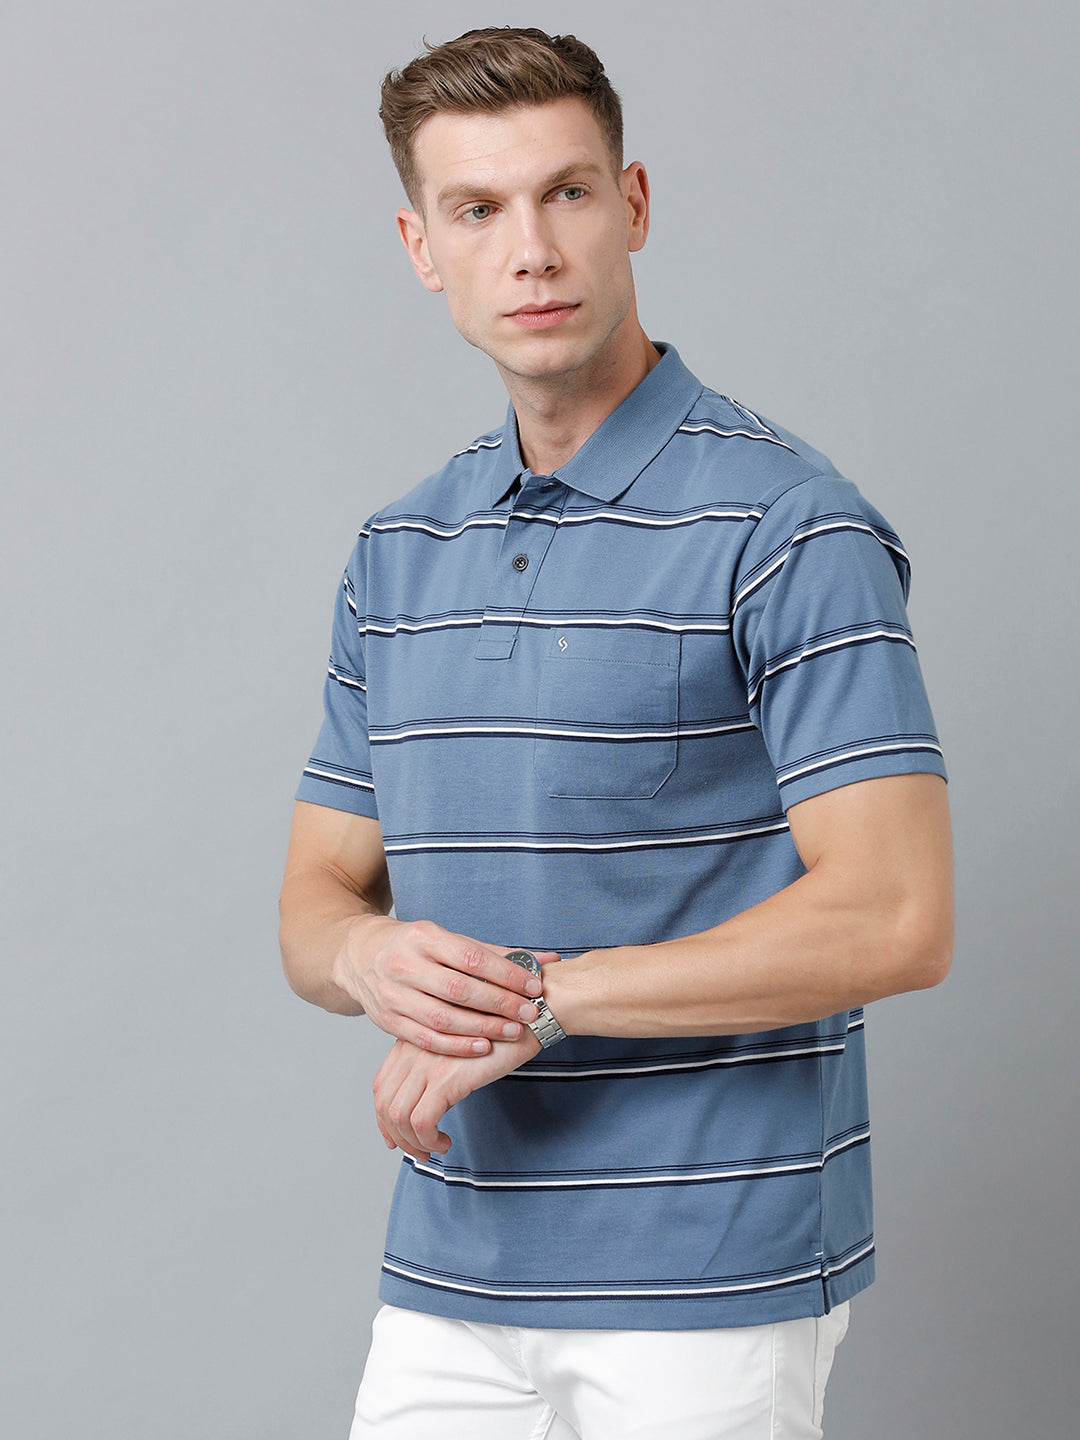 Classic Polo Men's Cotton Blend Half Sleeve Striped Authentic Fit Polo Neck Blue Color T-Shirt | Avon - 517 A